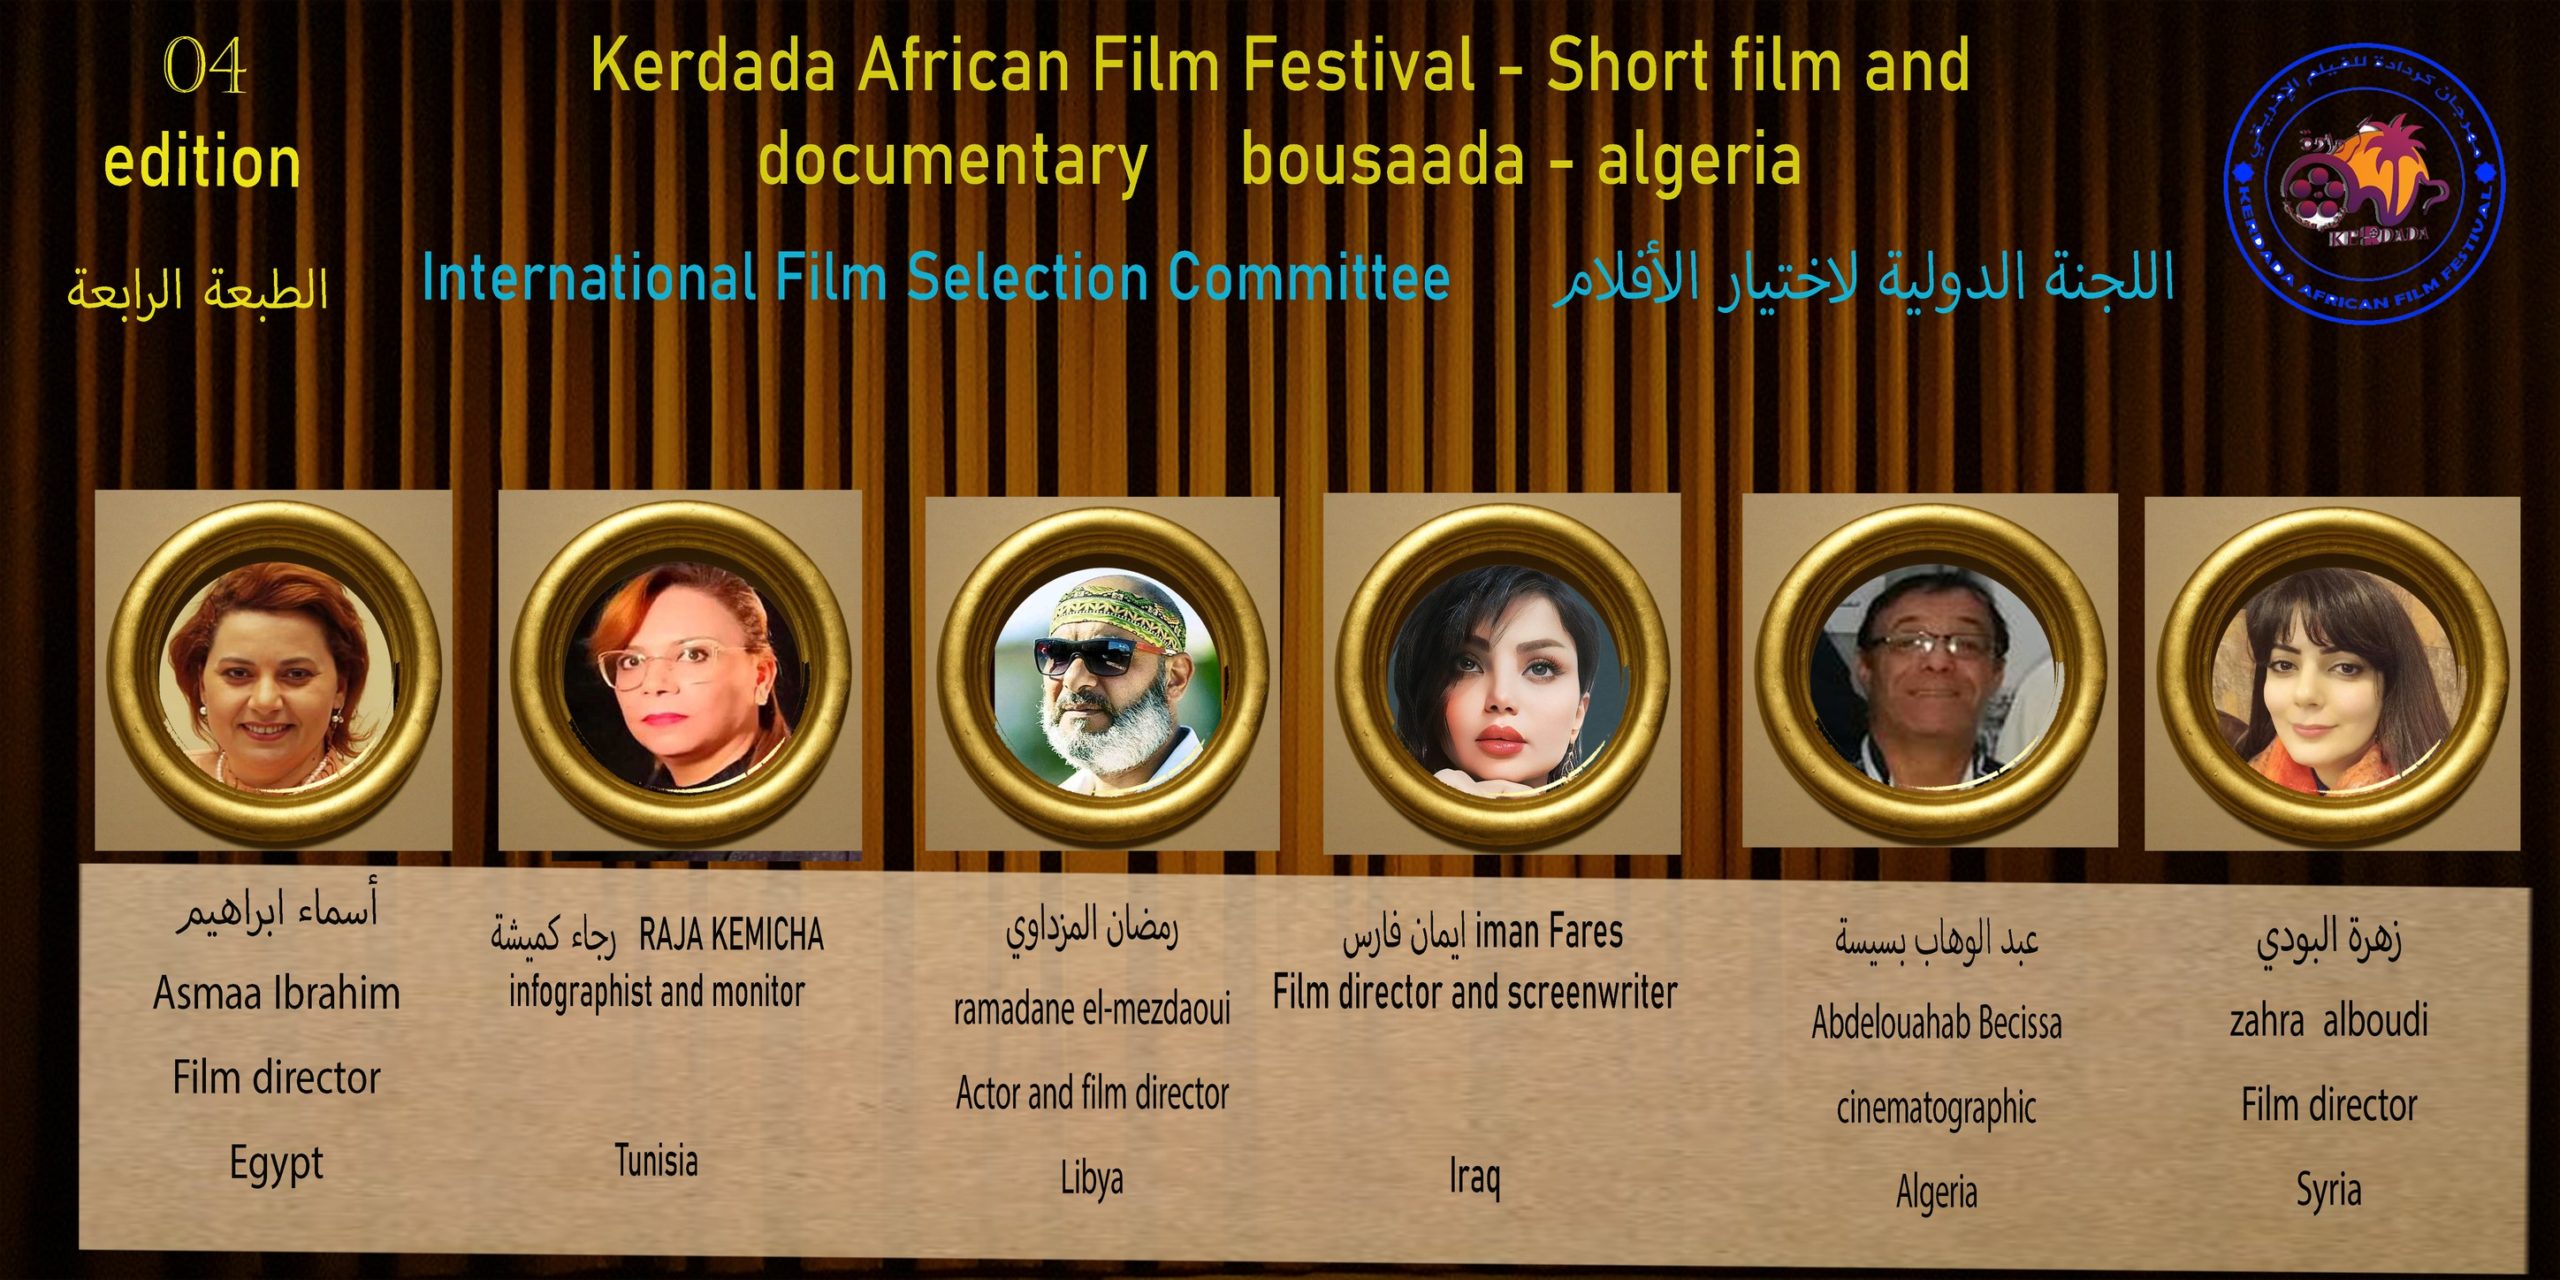 You are currently viewing بالصور: تعرفوا على أعضاء اللجنة الدولية لاختيار الأفلام في مهرجان كردادة للفيلم القصير والوثائقي 